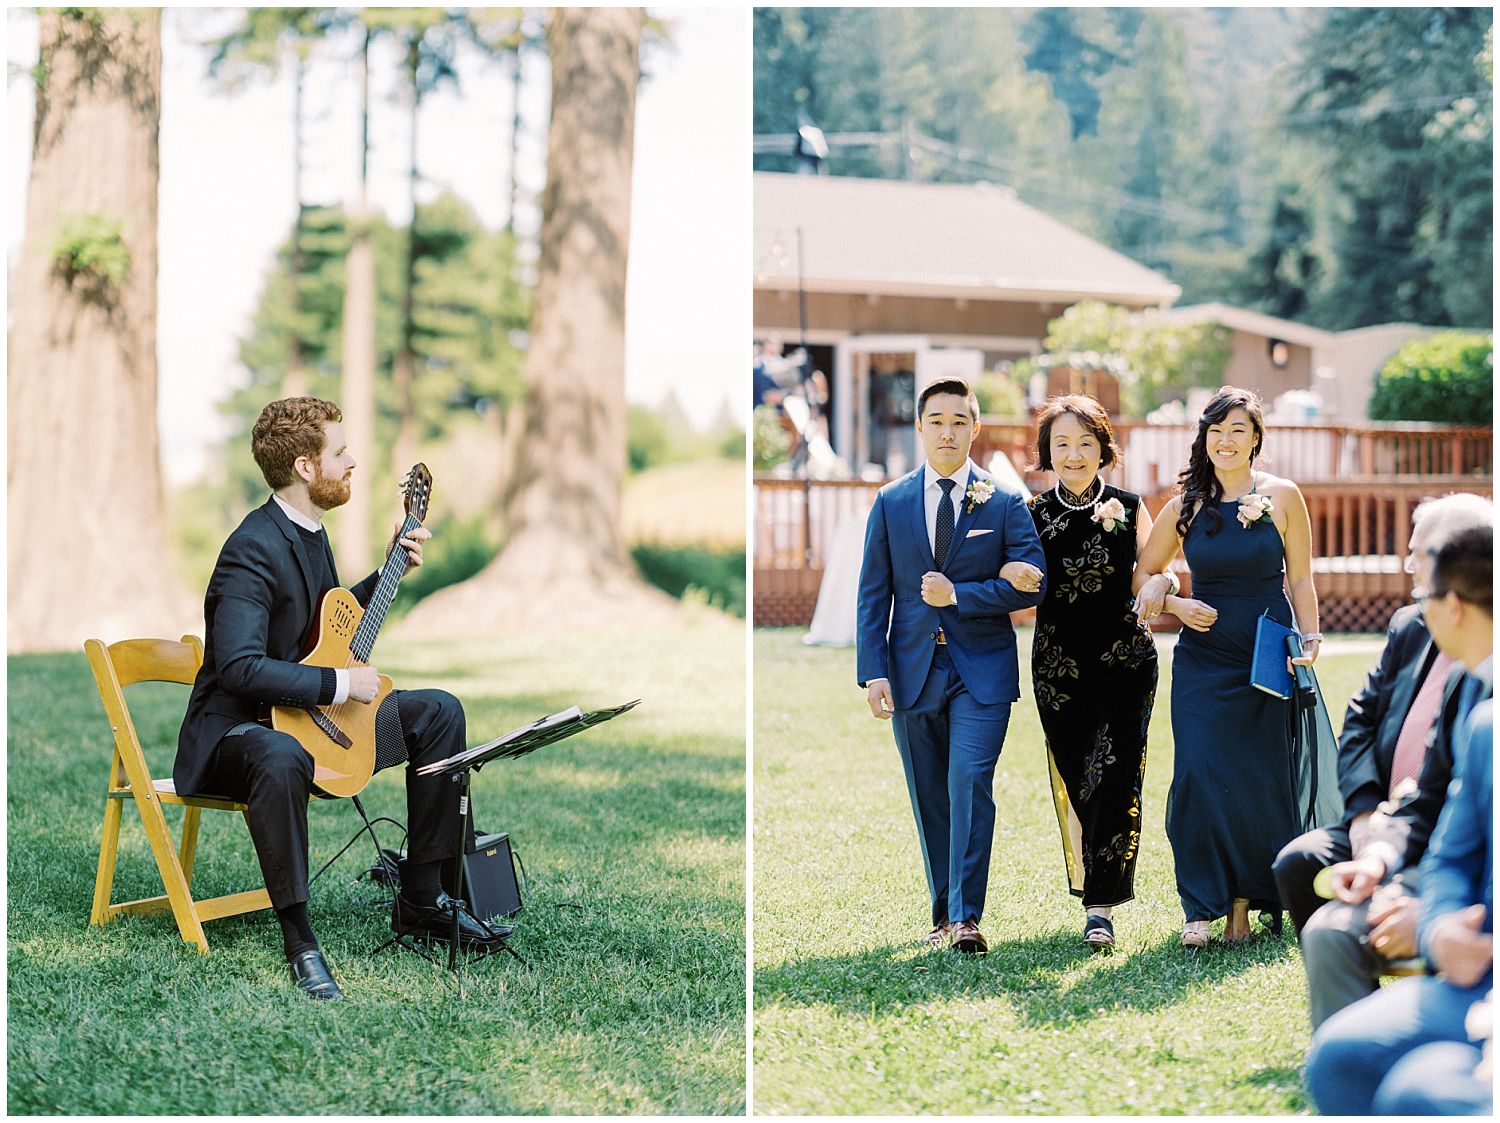 The Mountain Terrace Woodside California wedding photographer